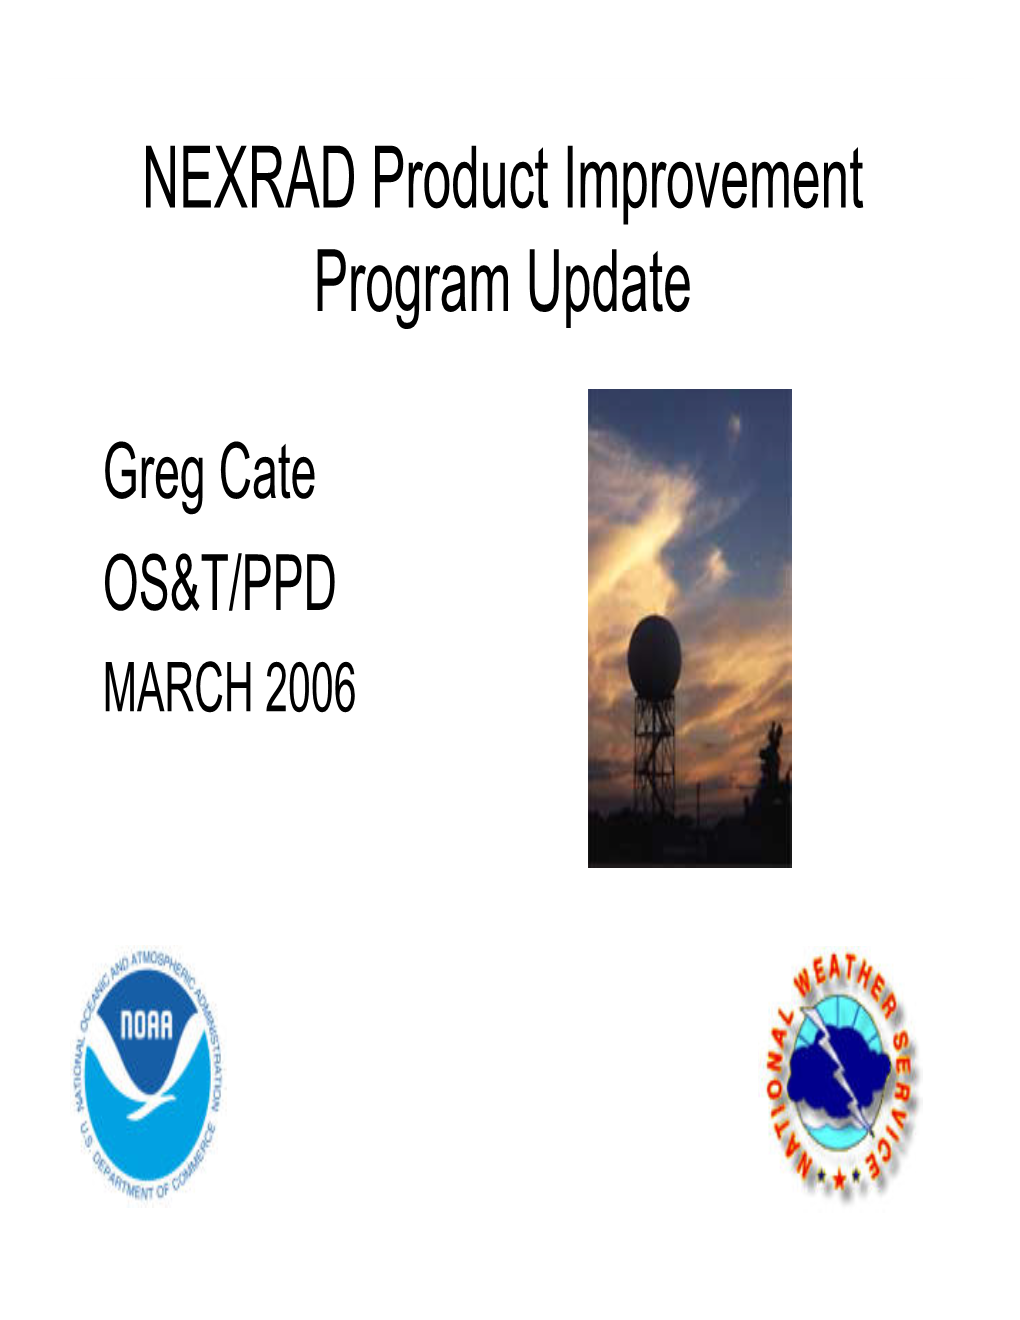 NEXRAD Product Improvement Program Update